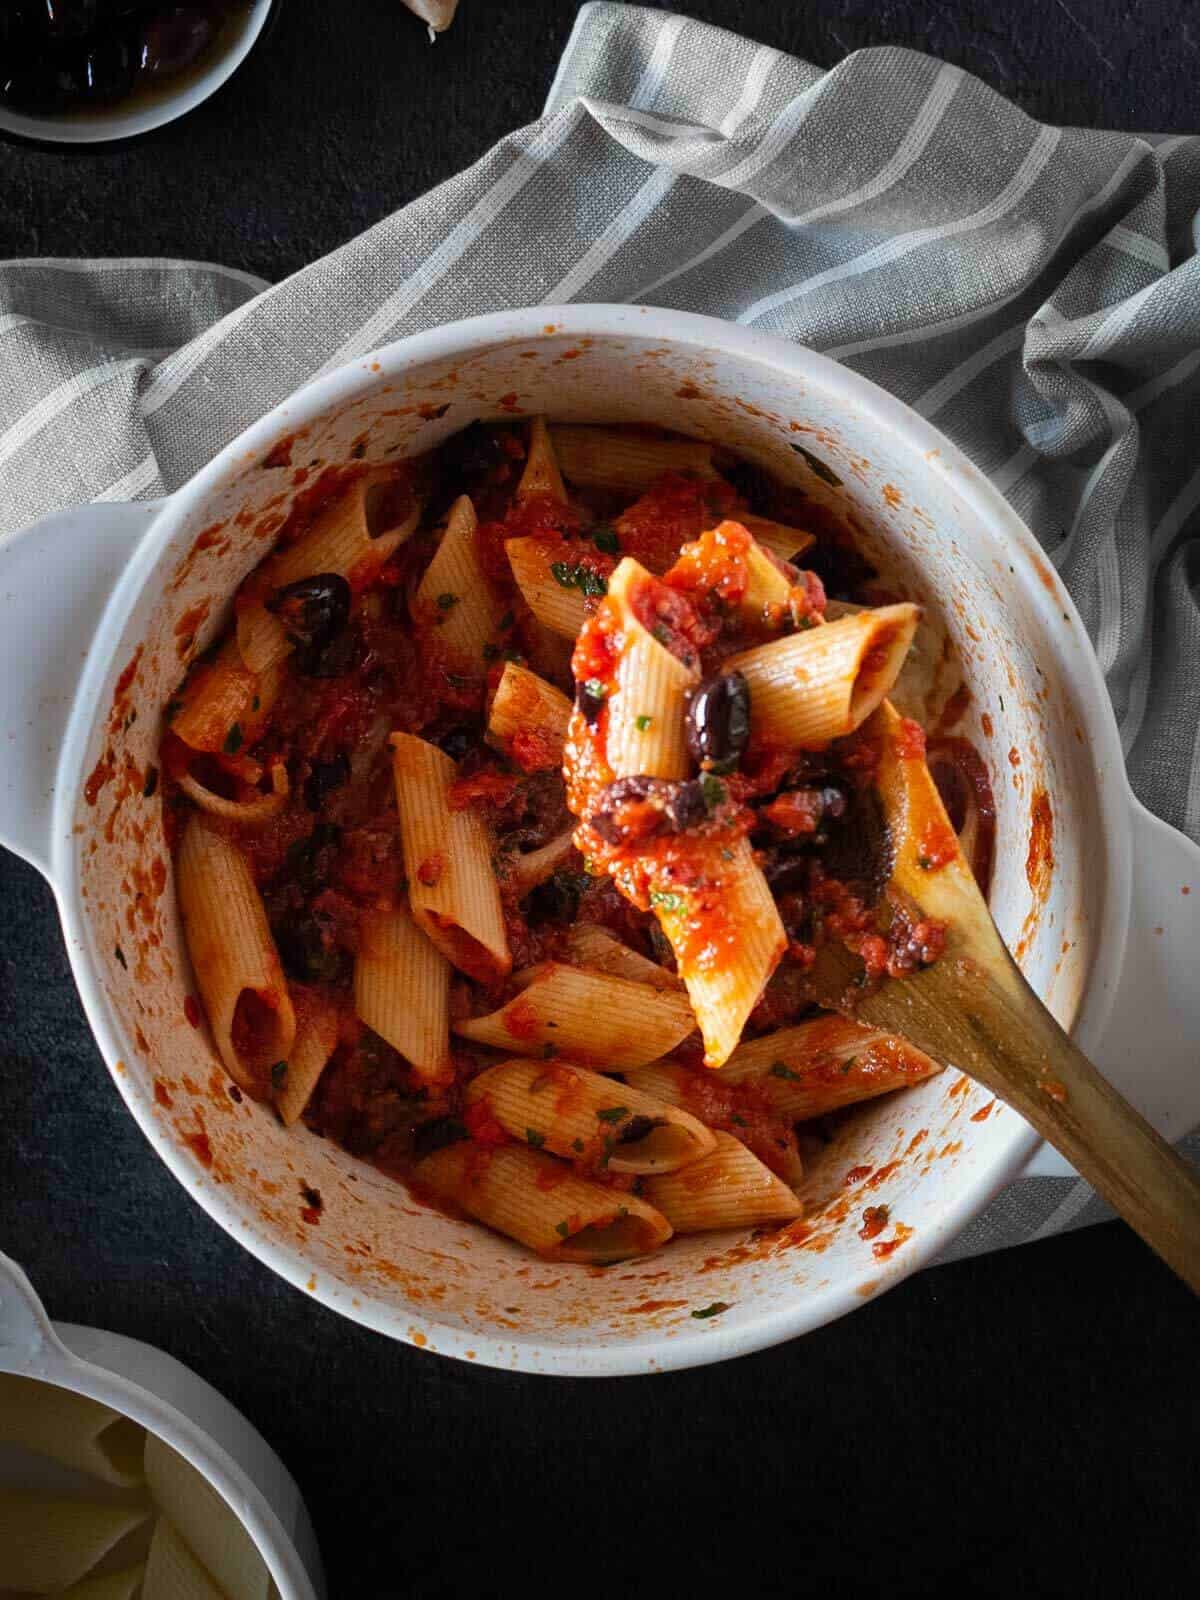 stir cooked pasta in puttanesca sauce